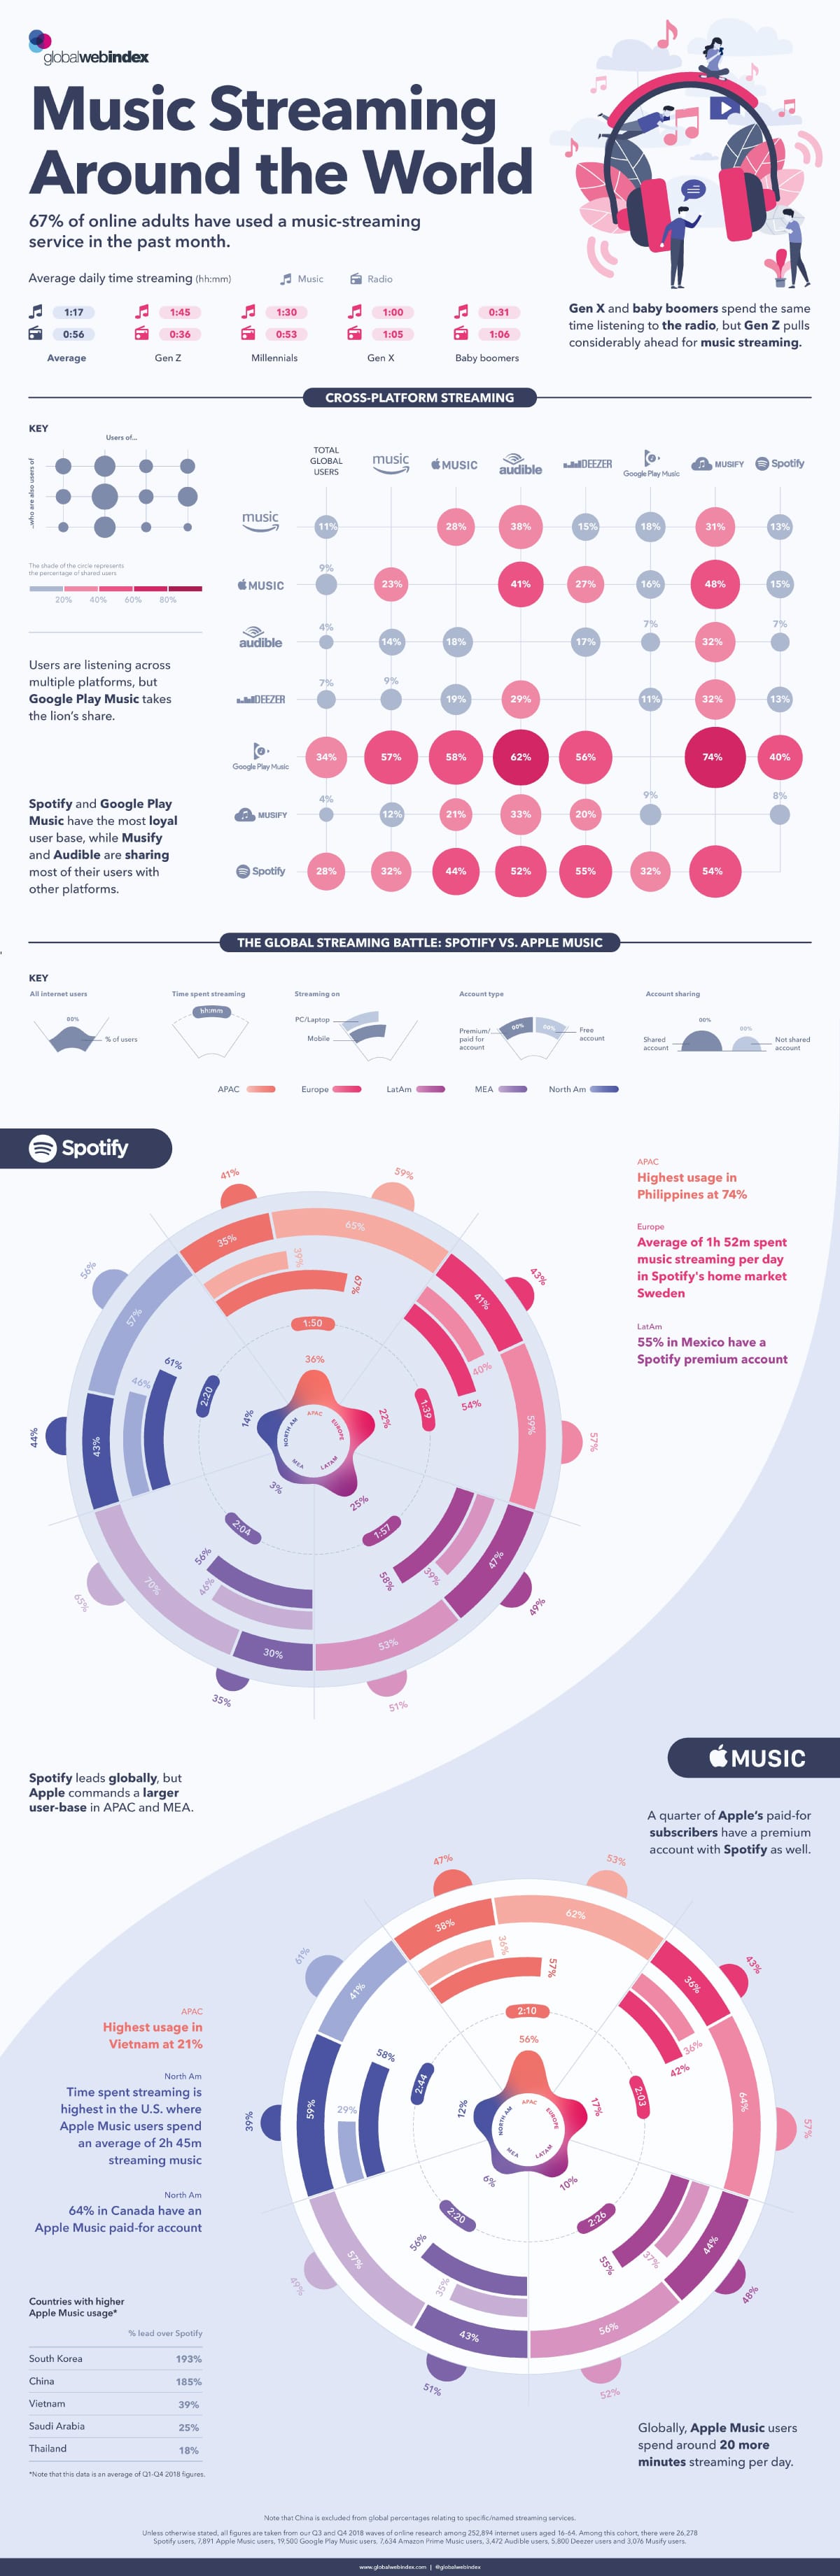 Global Music Streaming Platforms Infographic